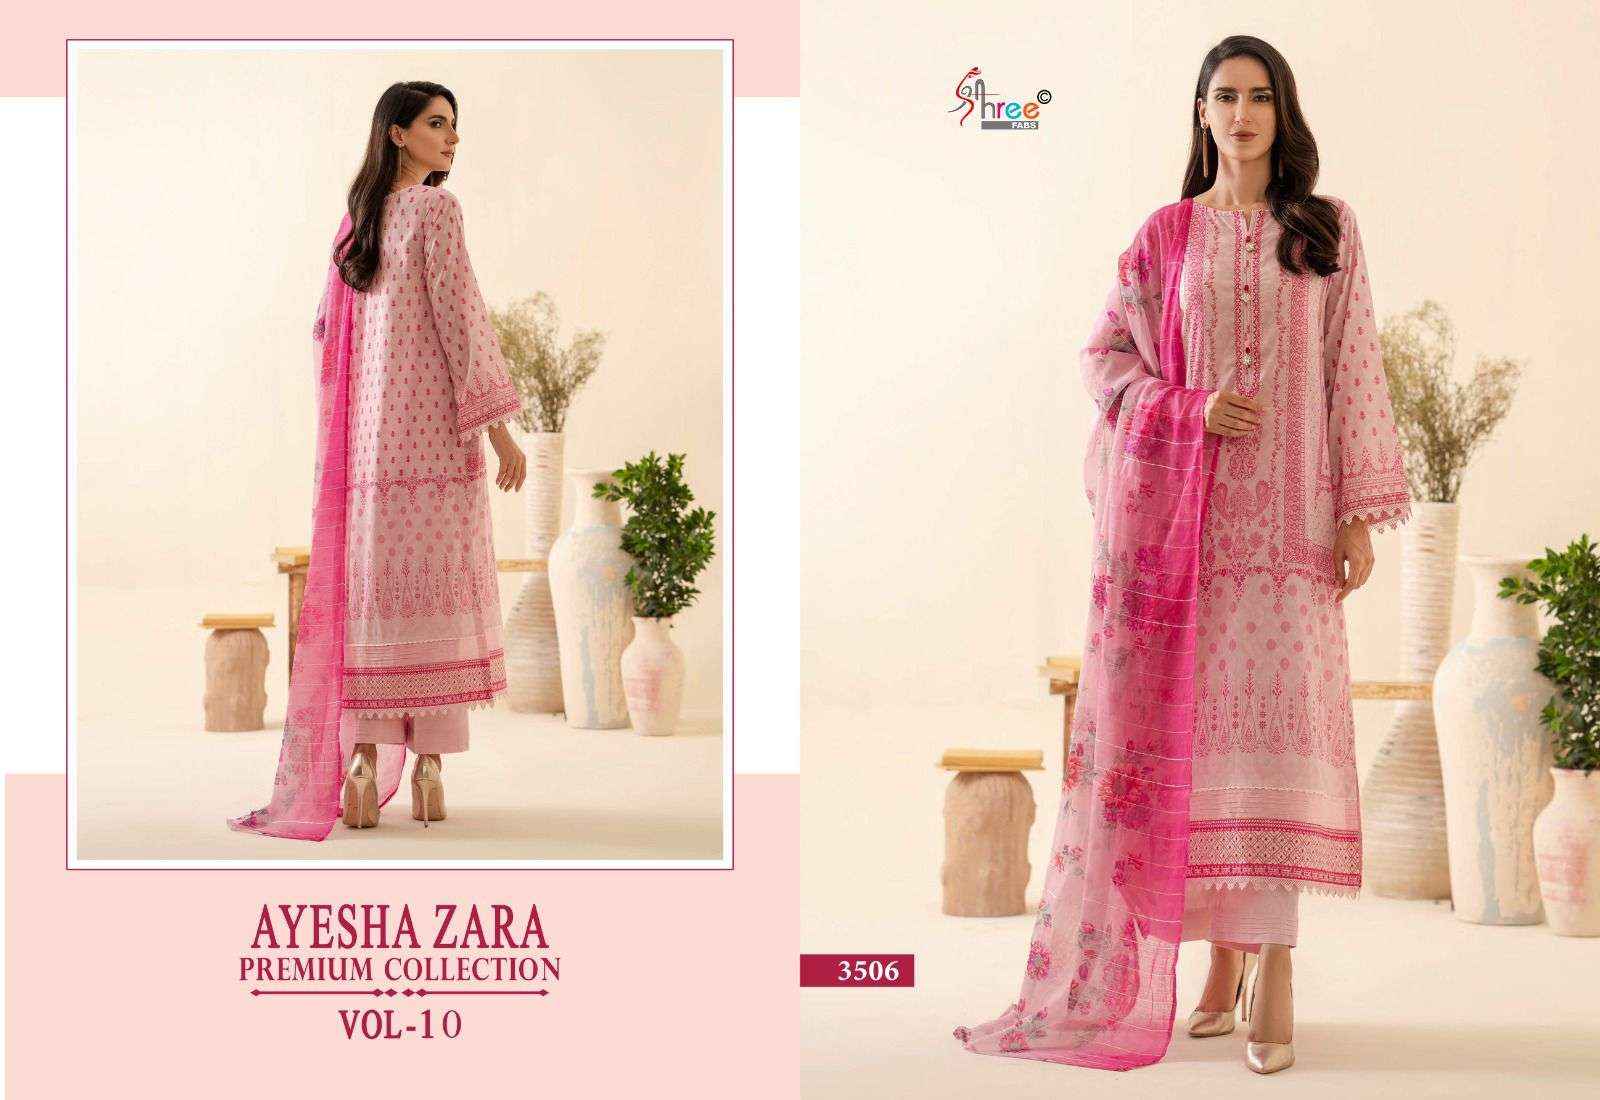 Shree Fabs Ayesha Zara Premium Collection Vol 10 Cotton Dress Material 6 pcs Catalogue